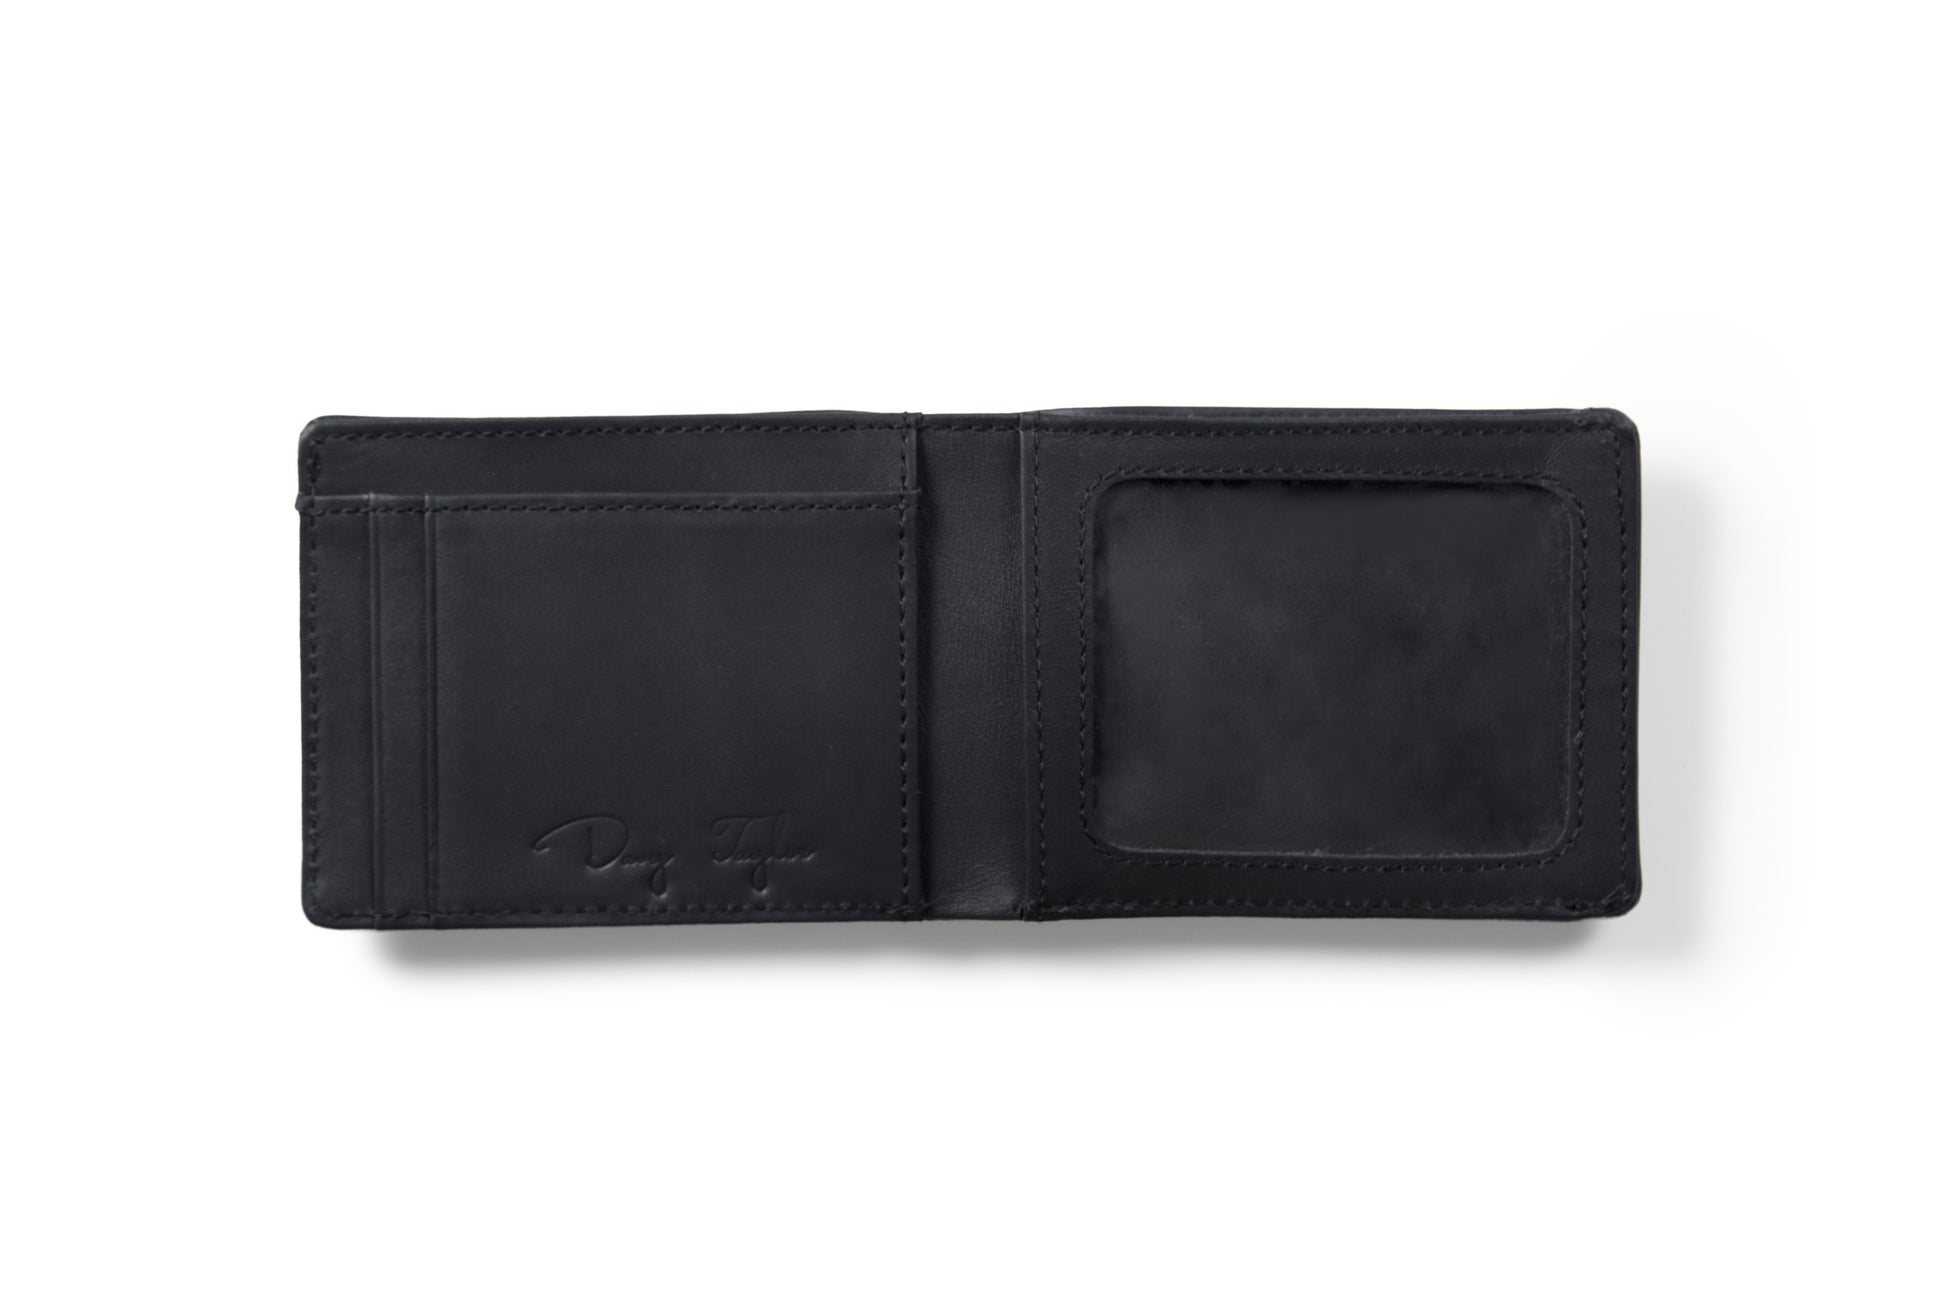 Copy of Sleek Ultra Slim Leather Wallet Cuir Ally Smart Goods